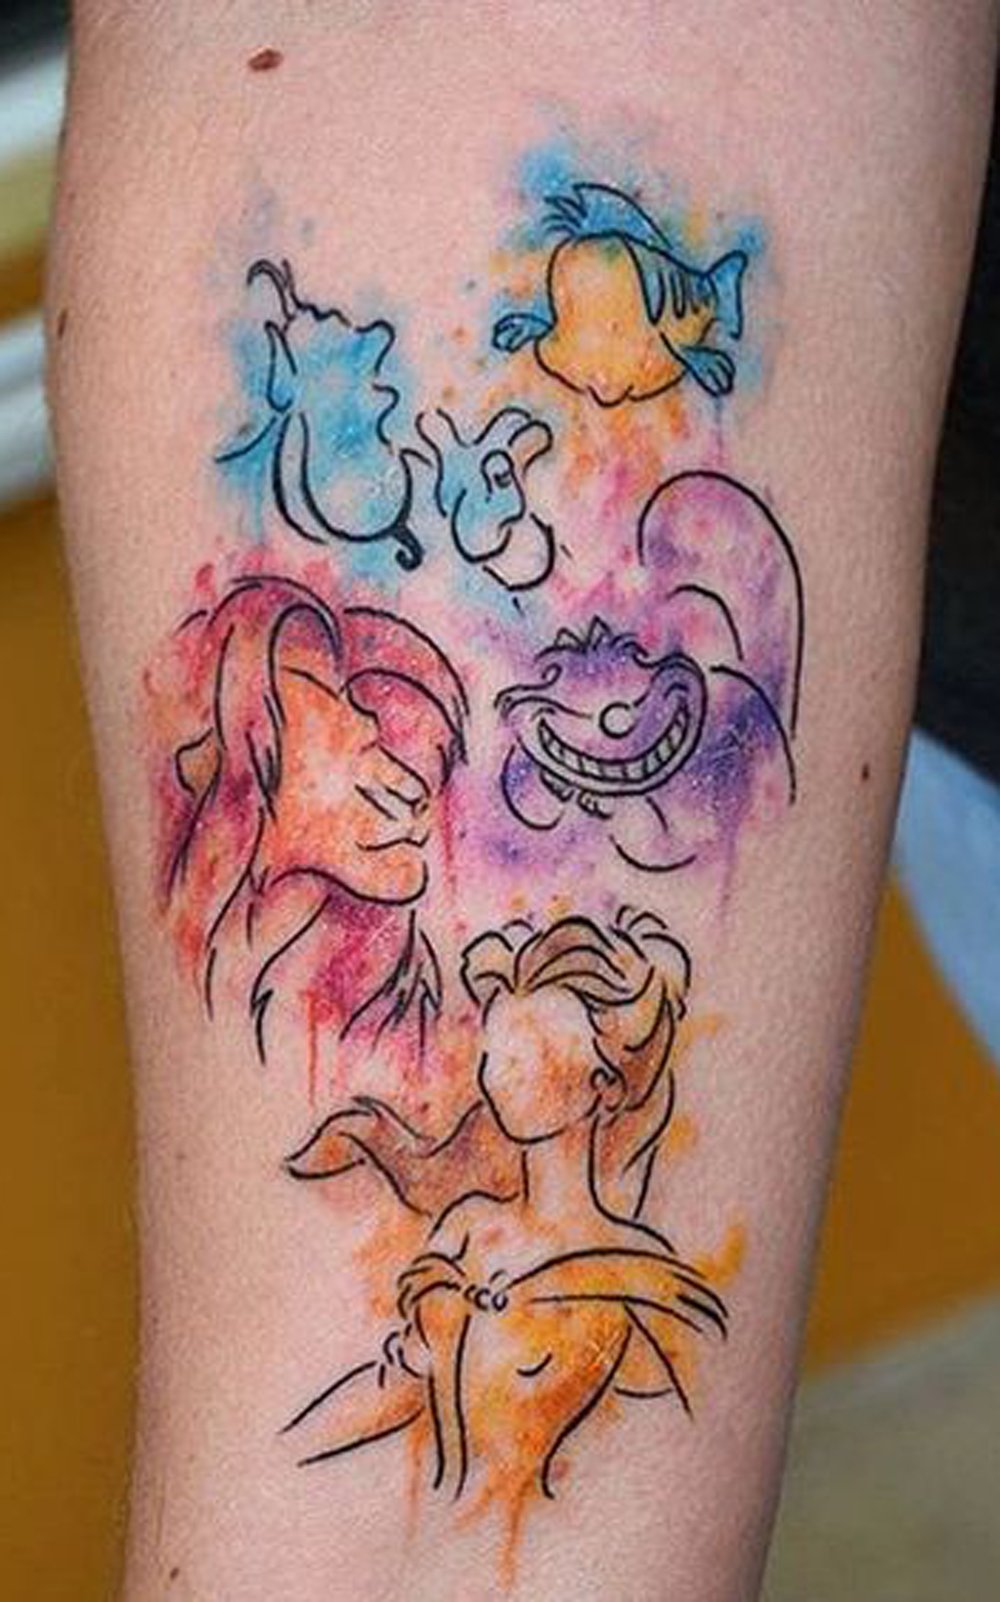 Watercolor Disney Character Arm Sleeve Tattoo Ideas for Women - Lion King Ariel Aladdin Genie Beast ad the Beast Belle - www.MyBodiArt.com